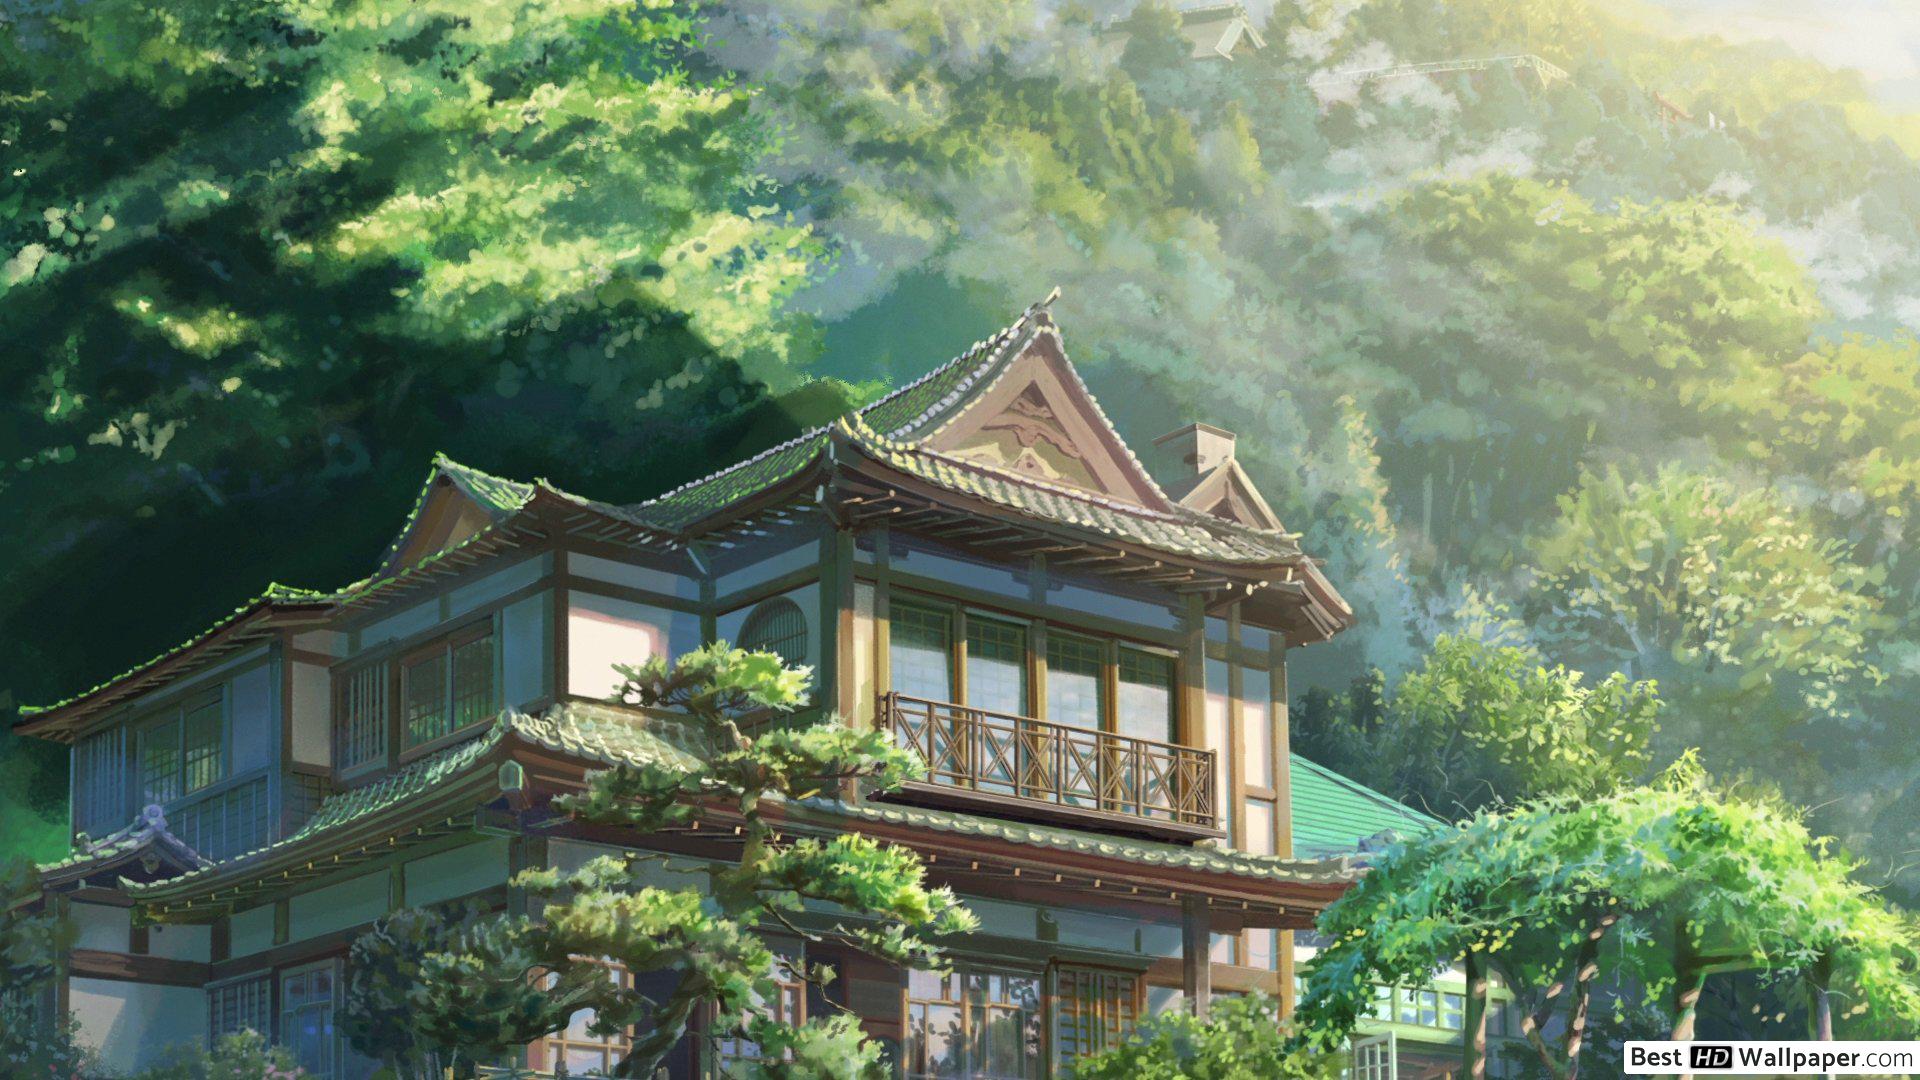 kimi no na wa wallpaper,chinese architecture,nature,architecture,japanese architecture,property